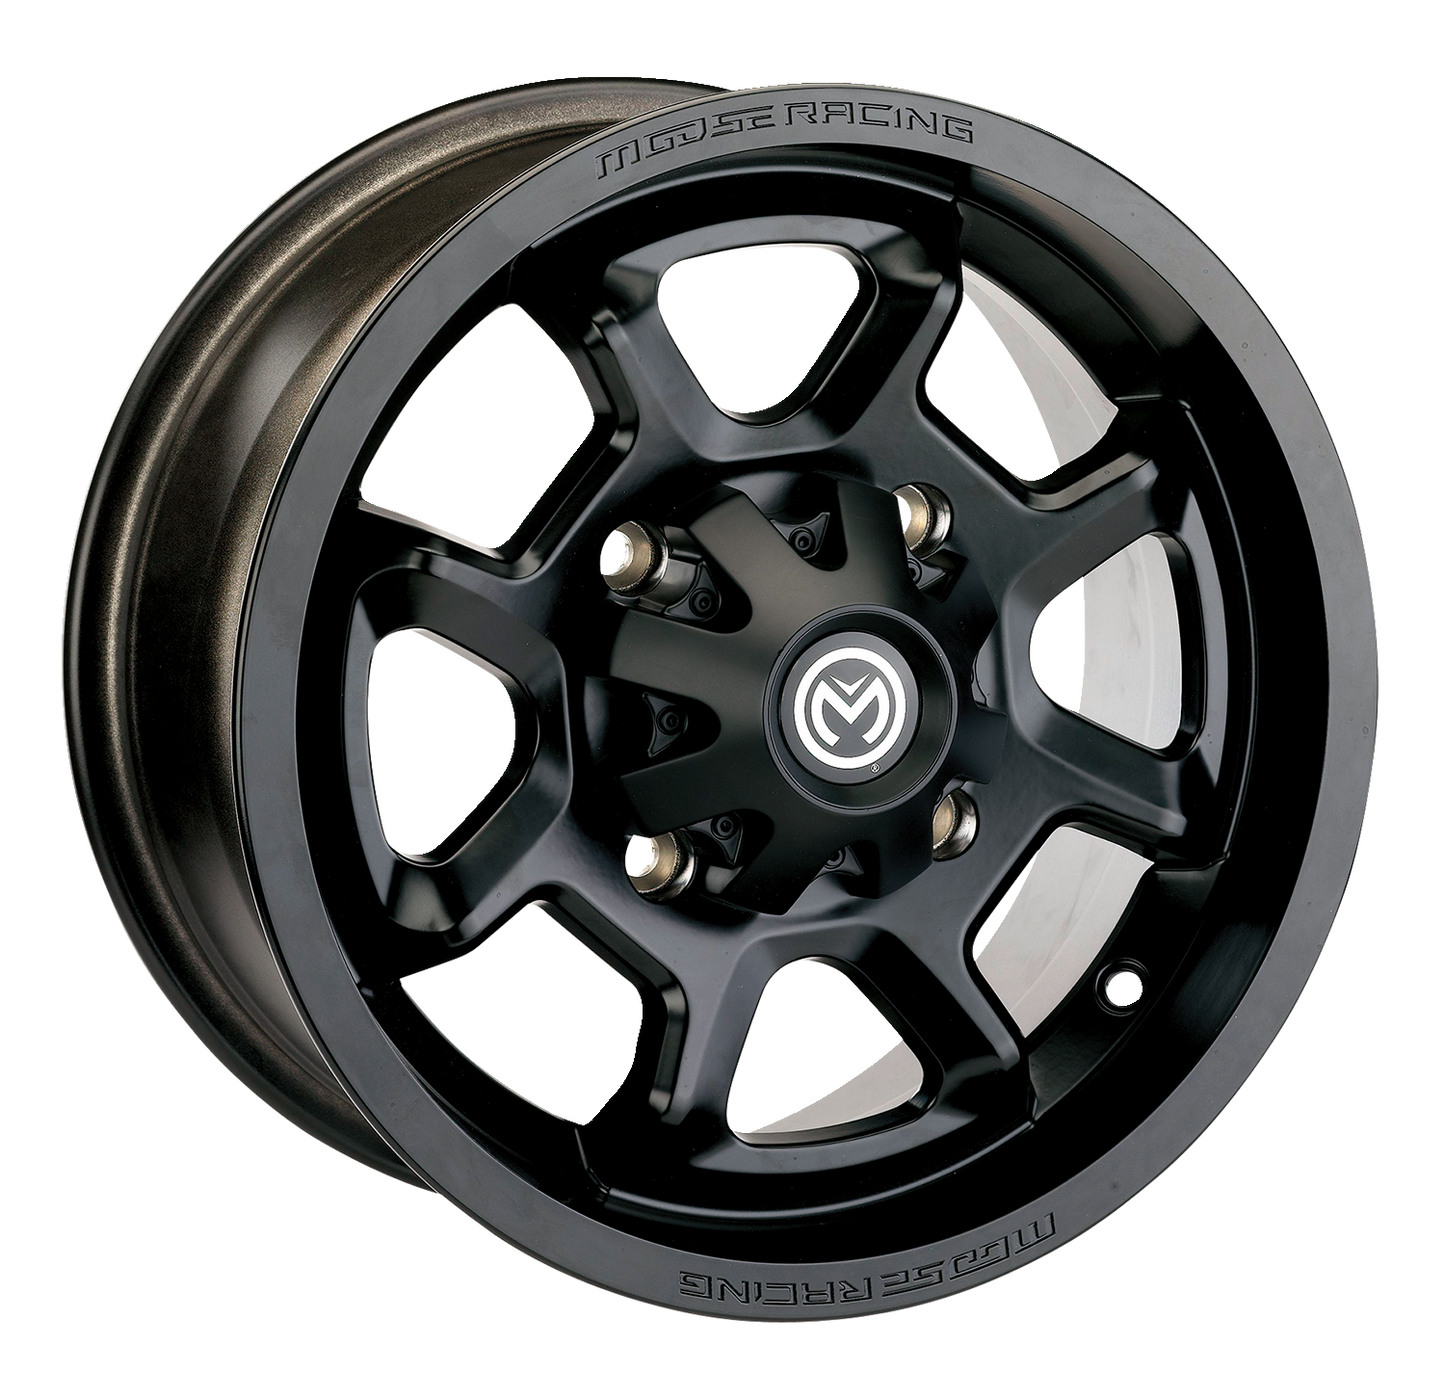 MOOSE UTILITY Wheel - 415X - Rear - Black - 12x8 - 4/156 - 4+4 415MO128156MB4